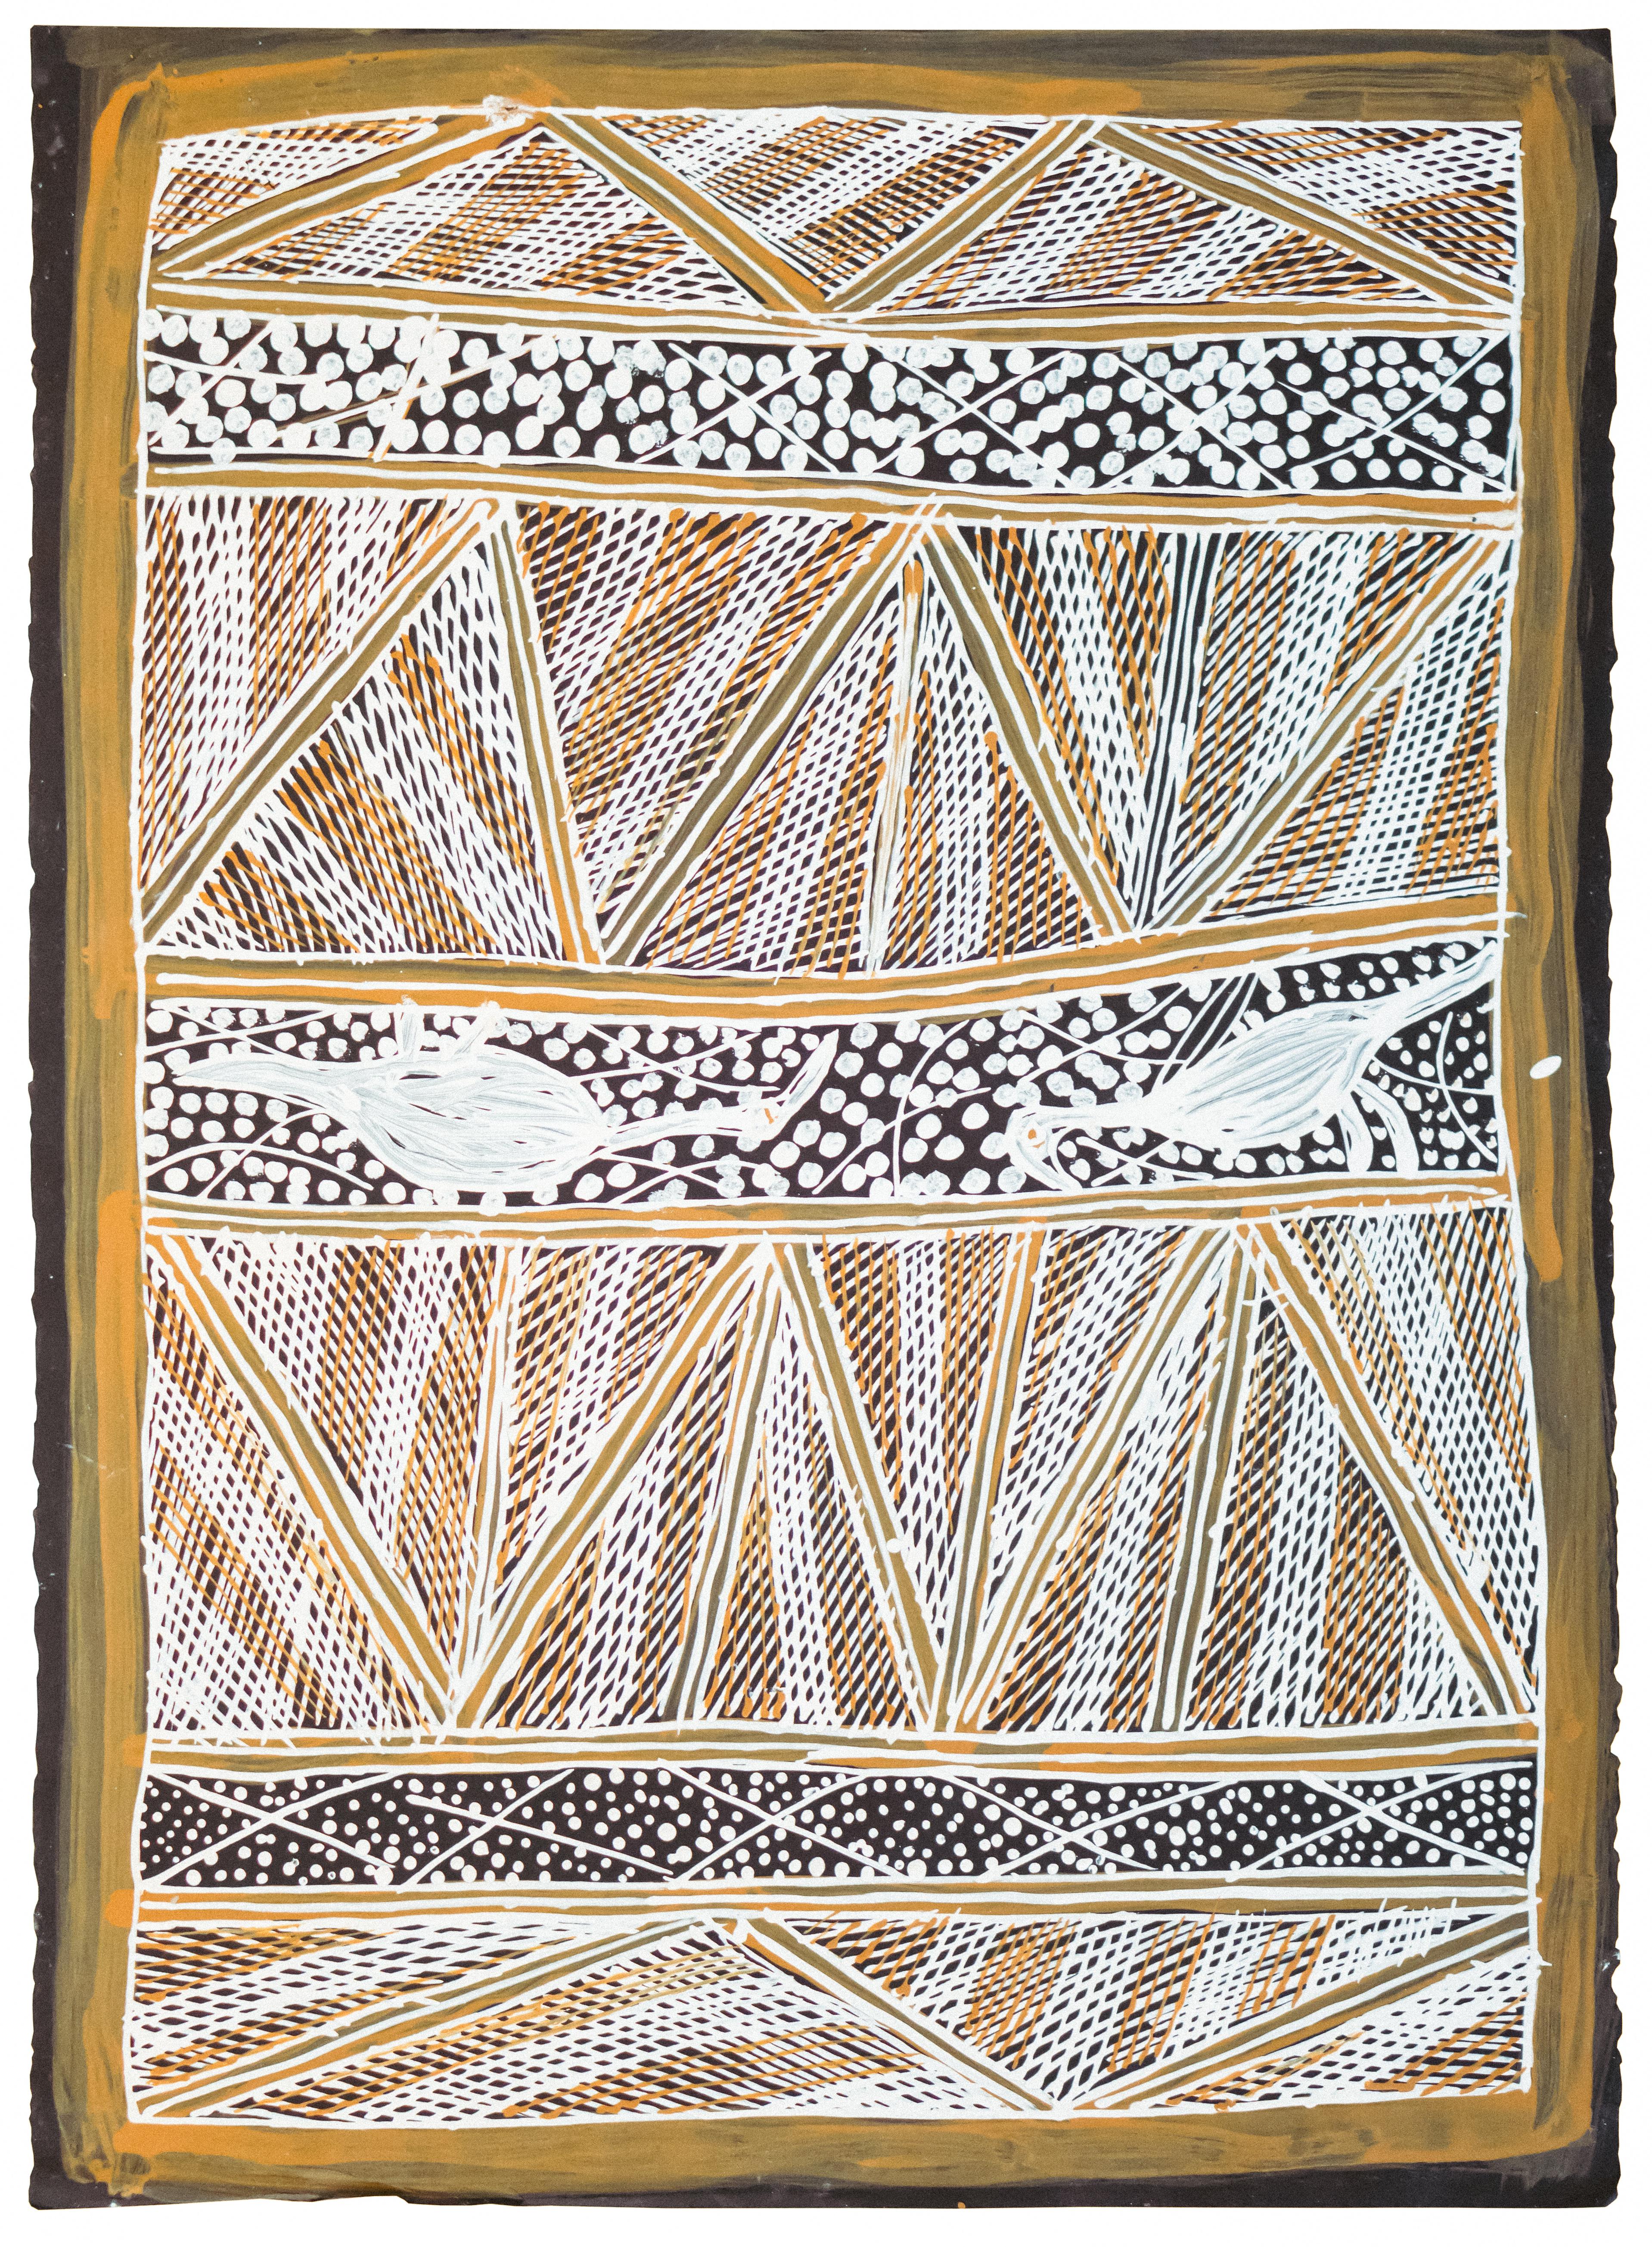 Mulkun Wirrpanda
Untitled XI, 2020
Earth pigment on paper
76cm x 56cm

Mulkun Wirrpanda was a senior artist of the Dhudi-Djapu clan from Dhuruputjpi in Eastern Arnhem Land and was a classificatory daughter of the late Dhäkiyarr Wirrpanda and mother